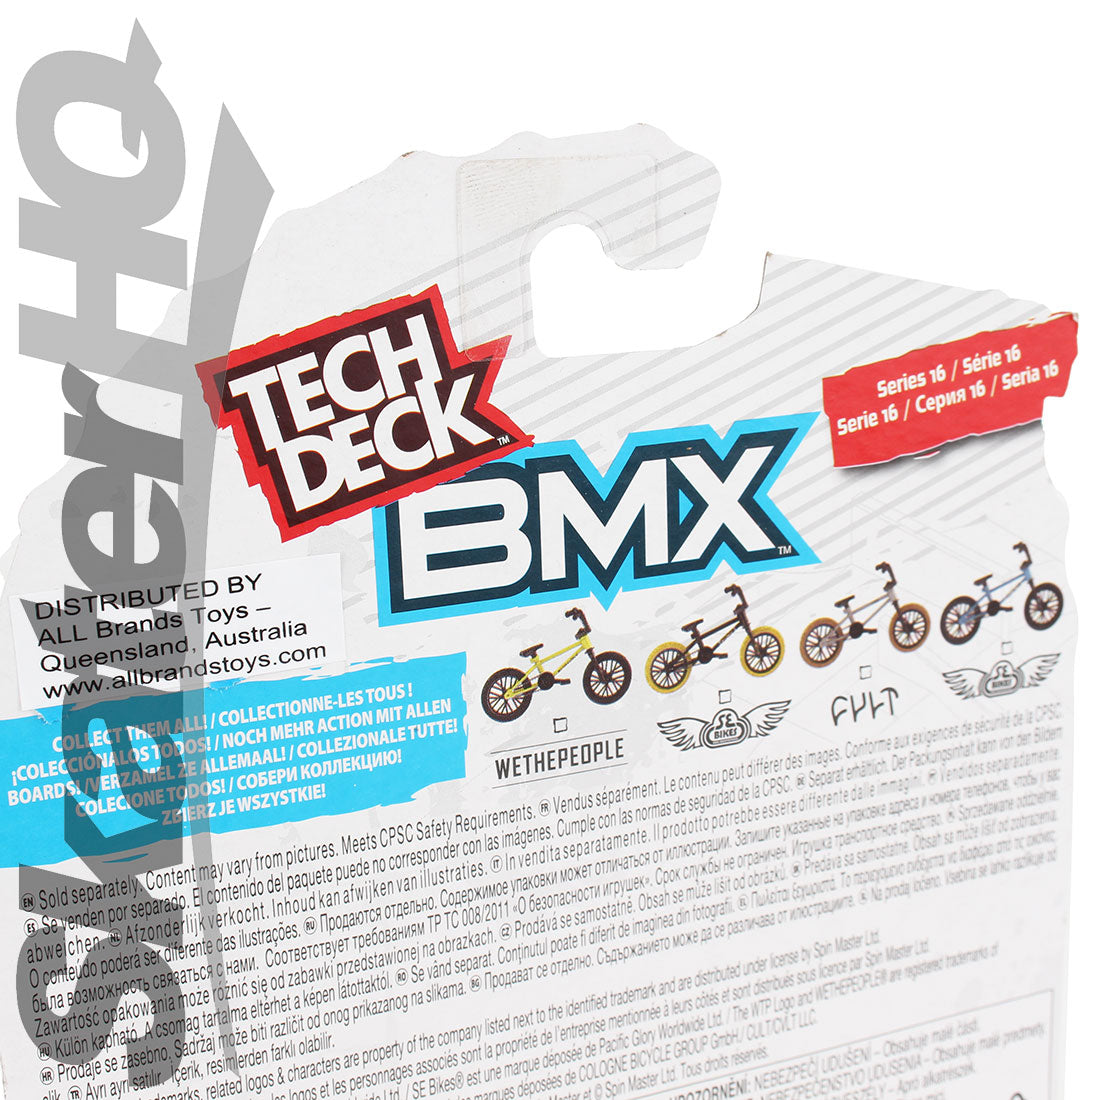 Tech Deck BMX S16 - SE Bikes Black/Yellow Skateboard Accessories